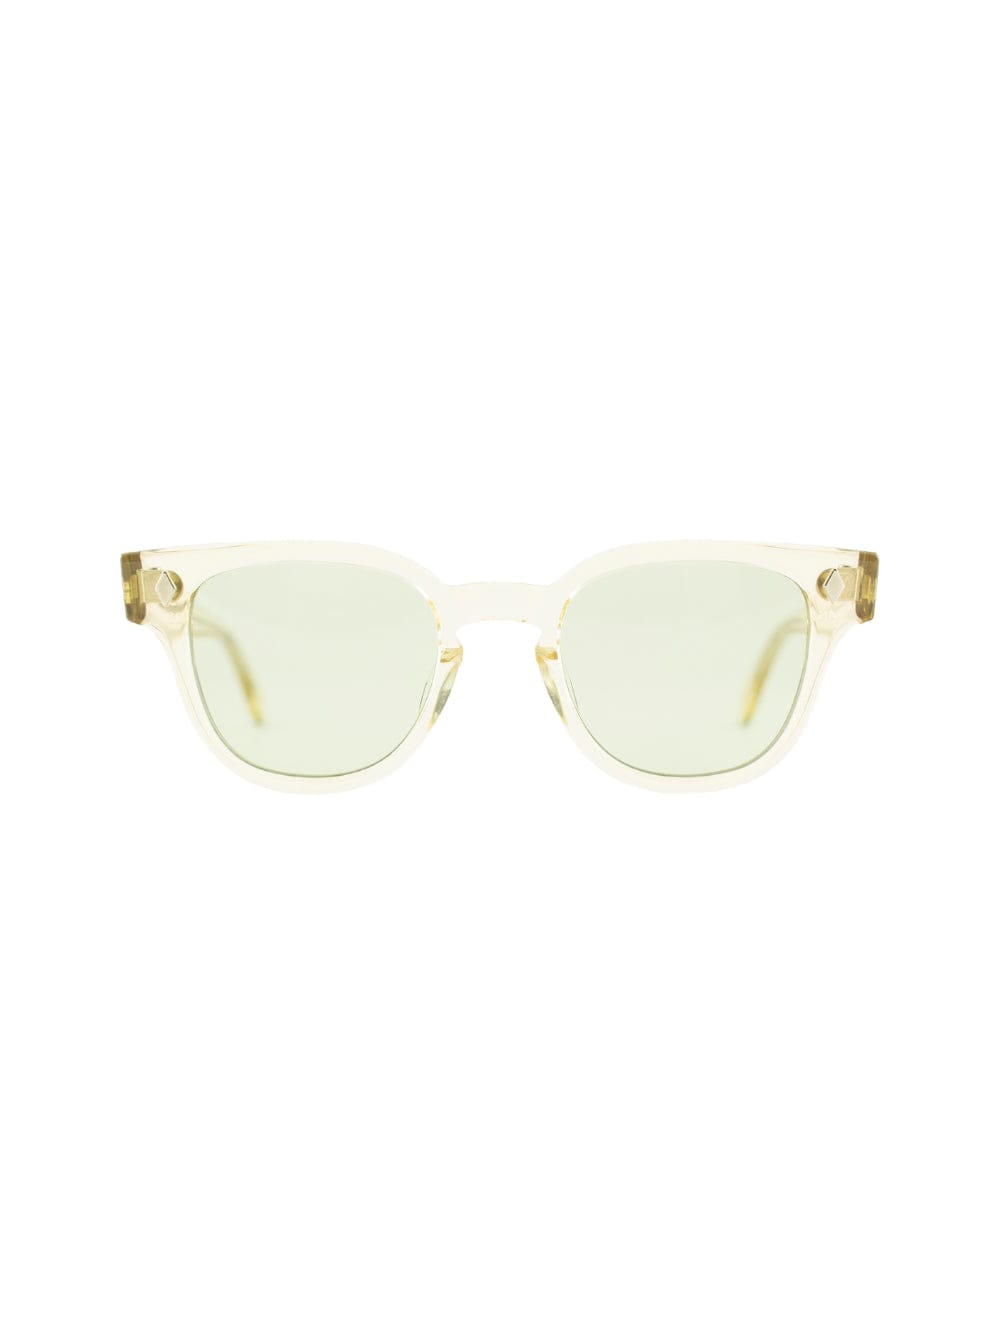 Julius Tart Optical Bryan - 46/22 - Champagne Sunglasses | ModeSens